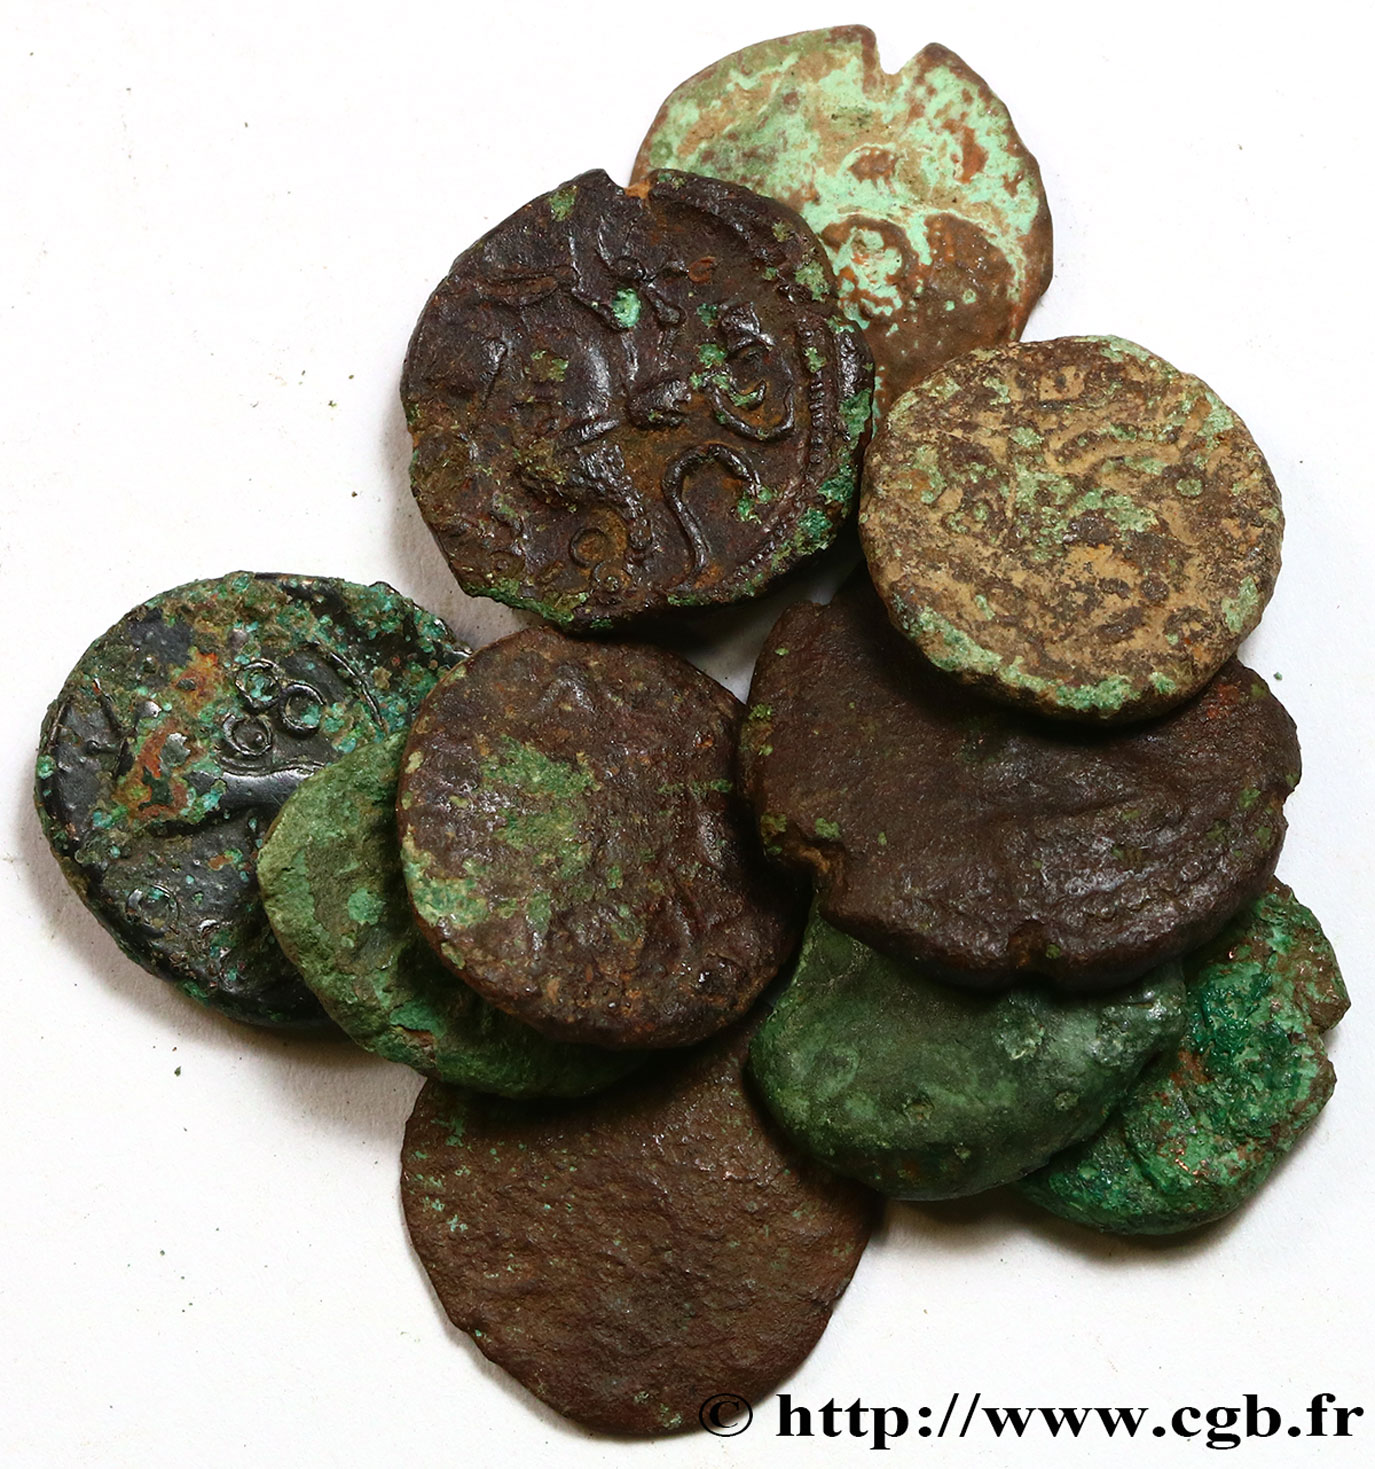 GALLO-BELGIANO - CELTICO Lot de 10 bronzes variés lote